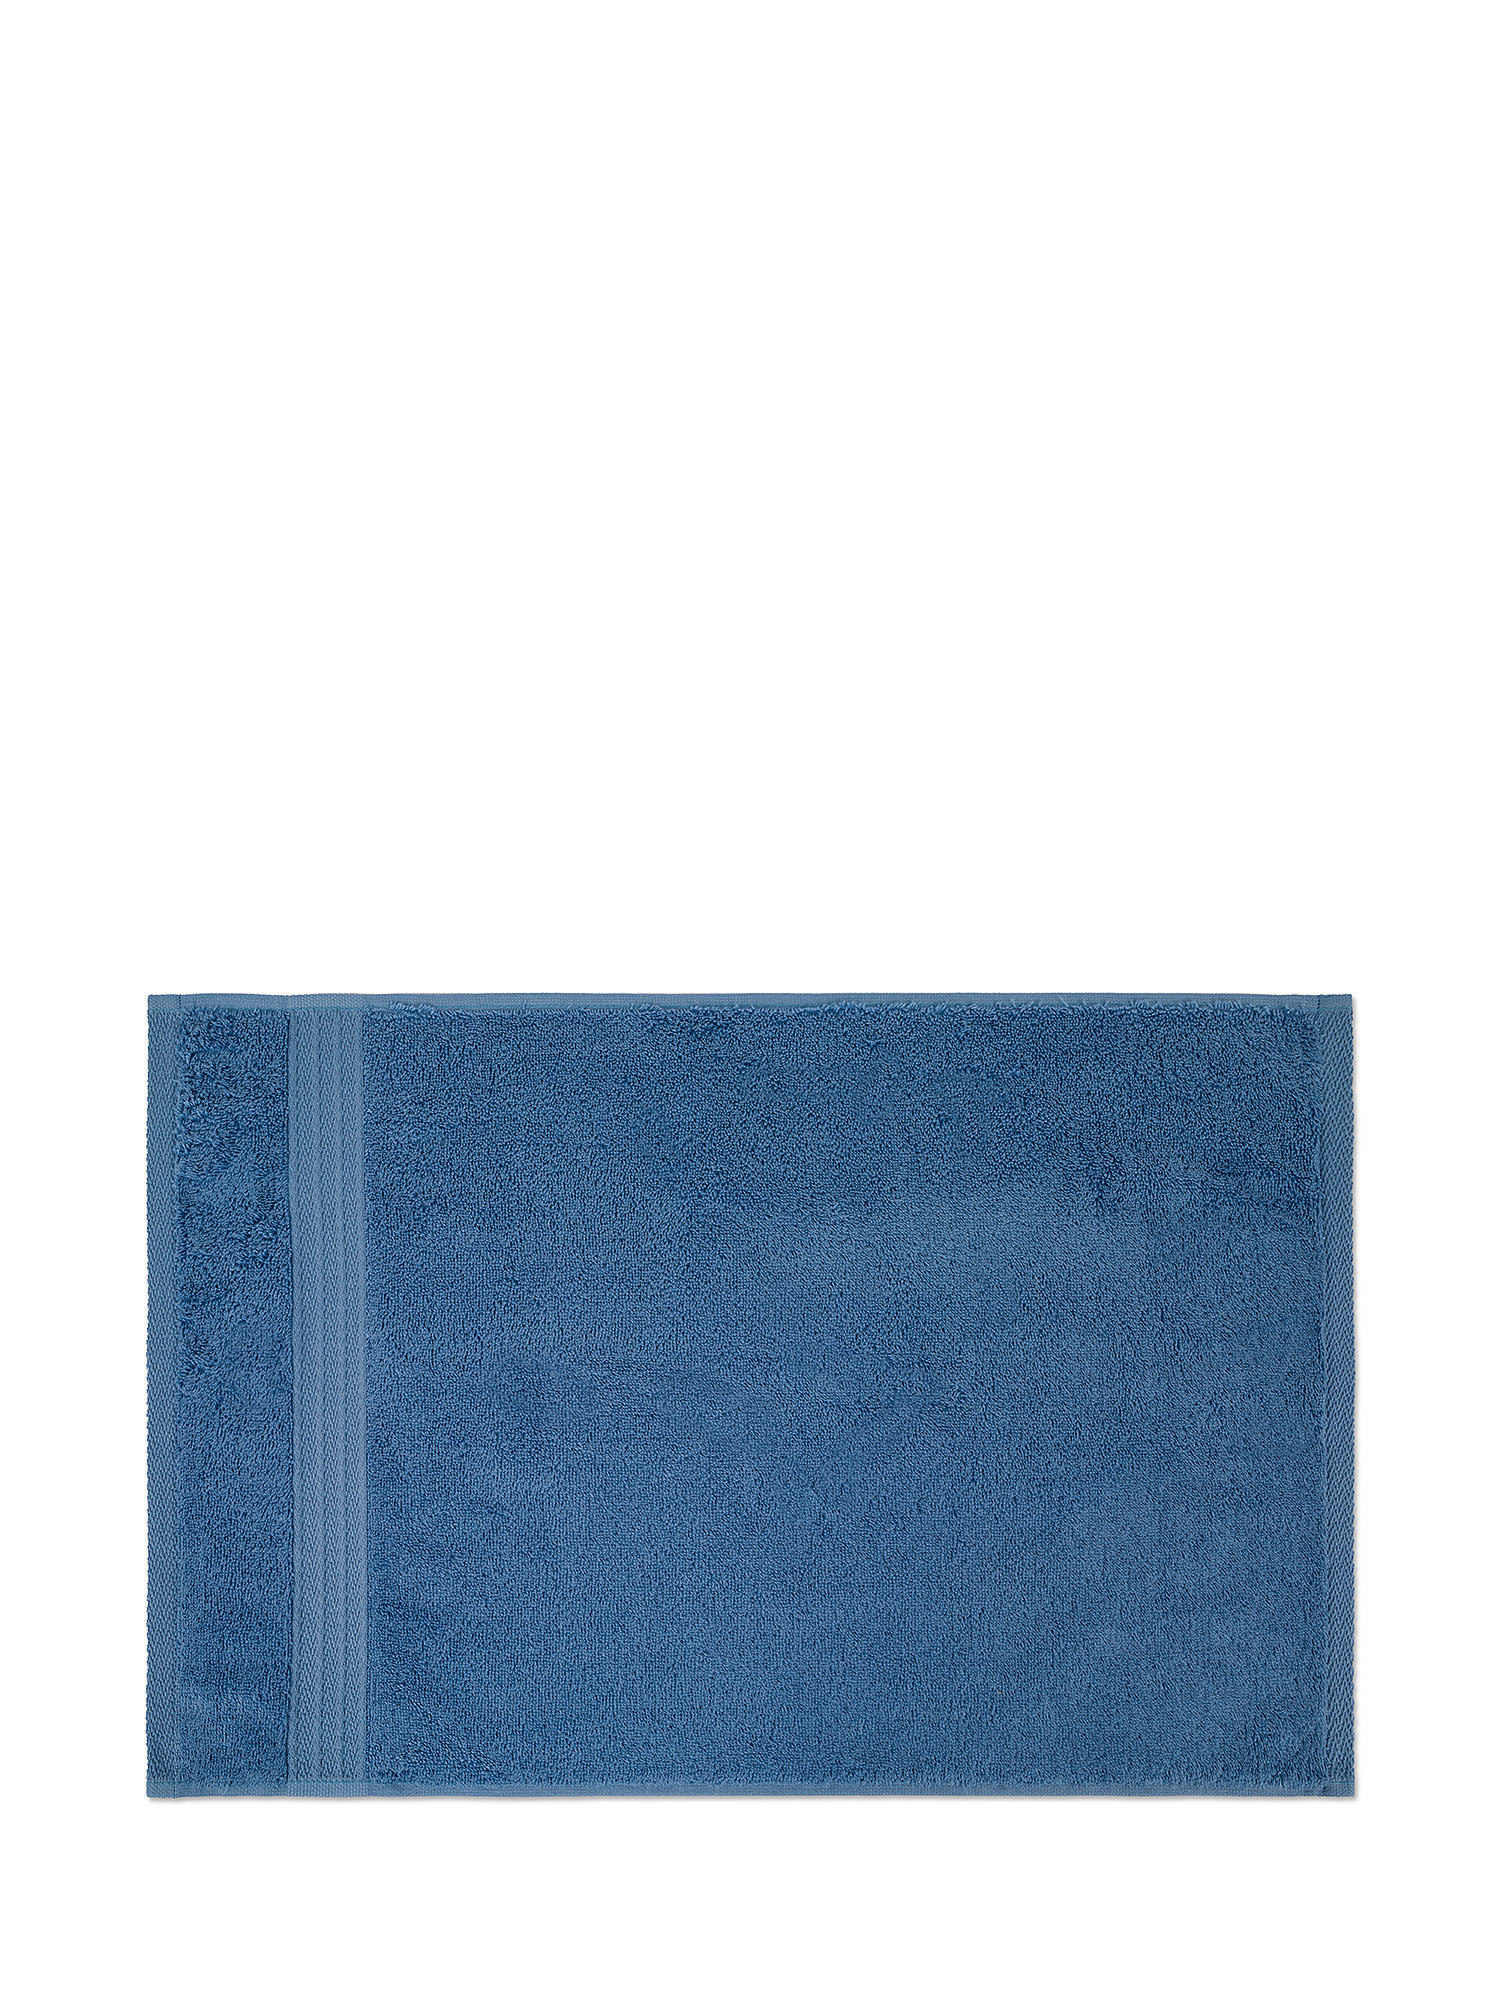 Zefiro solid color 100% cotton towel, Light Blue, large image number 1